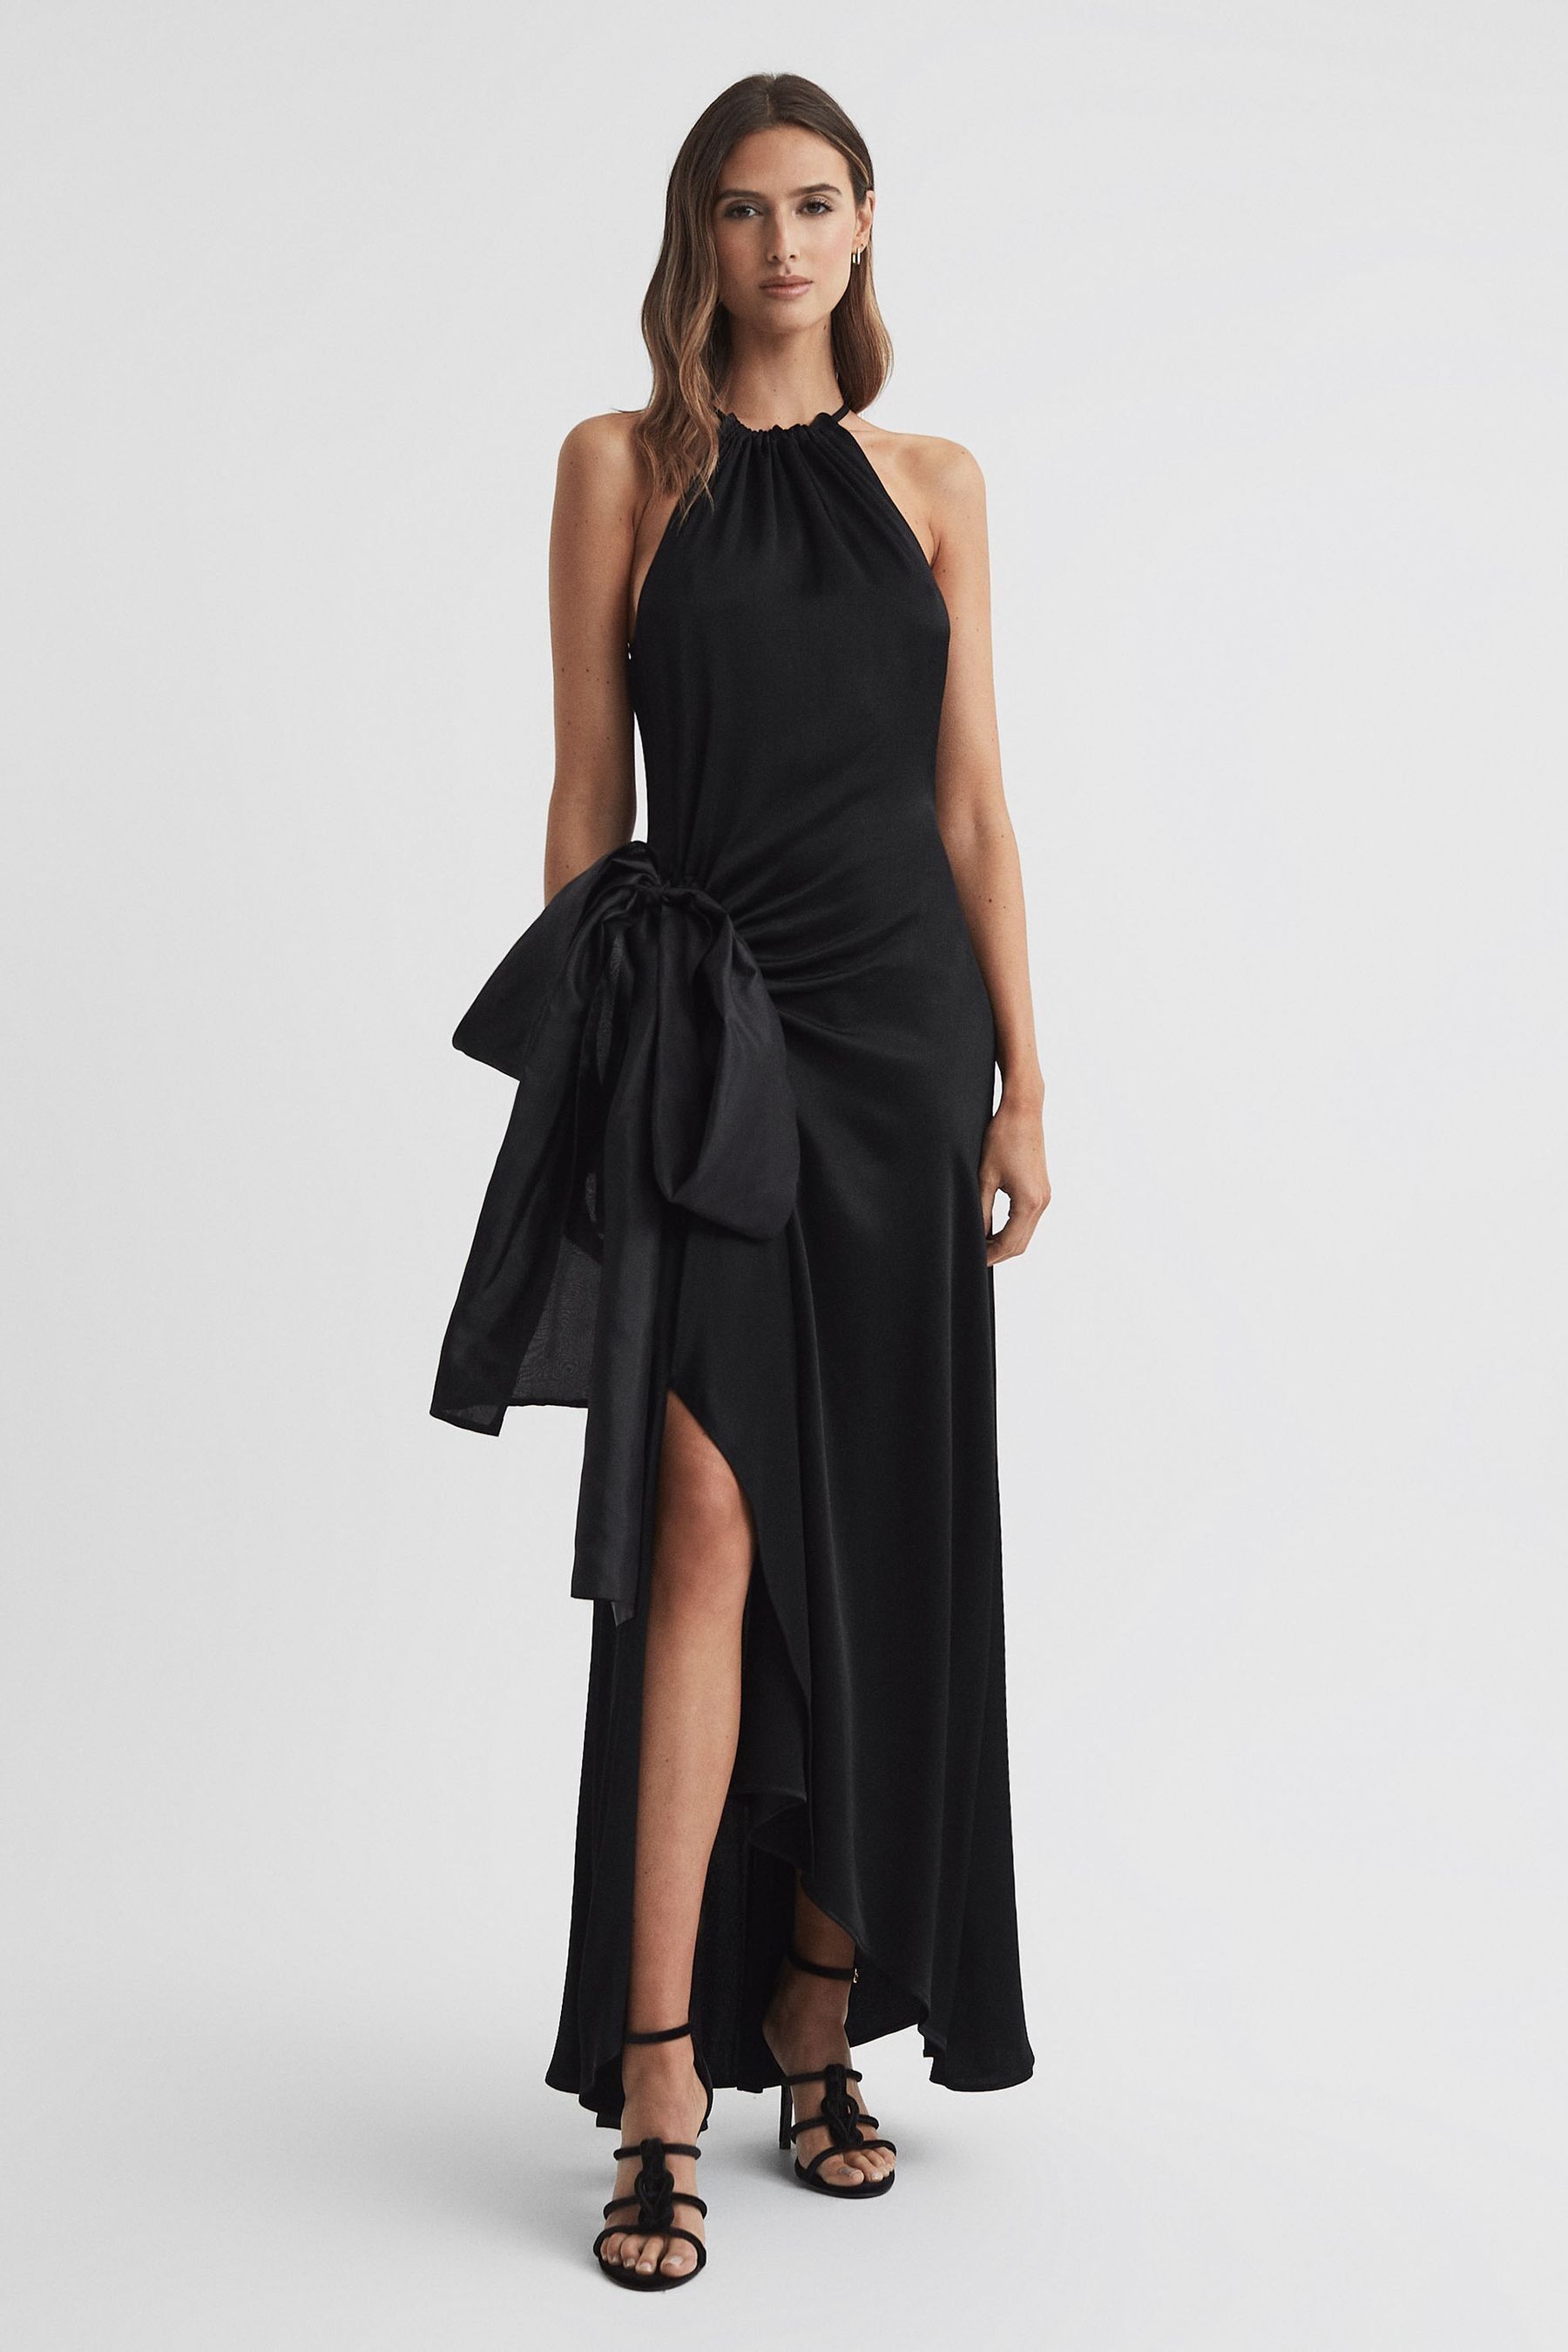 Reiss Luna - Black Satin Bow Halterneck Maxi Dress, Us 2